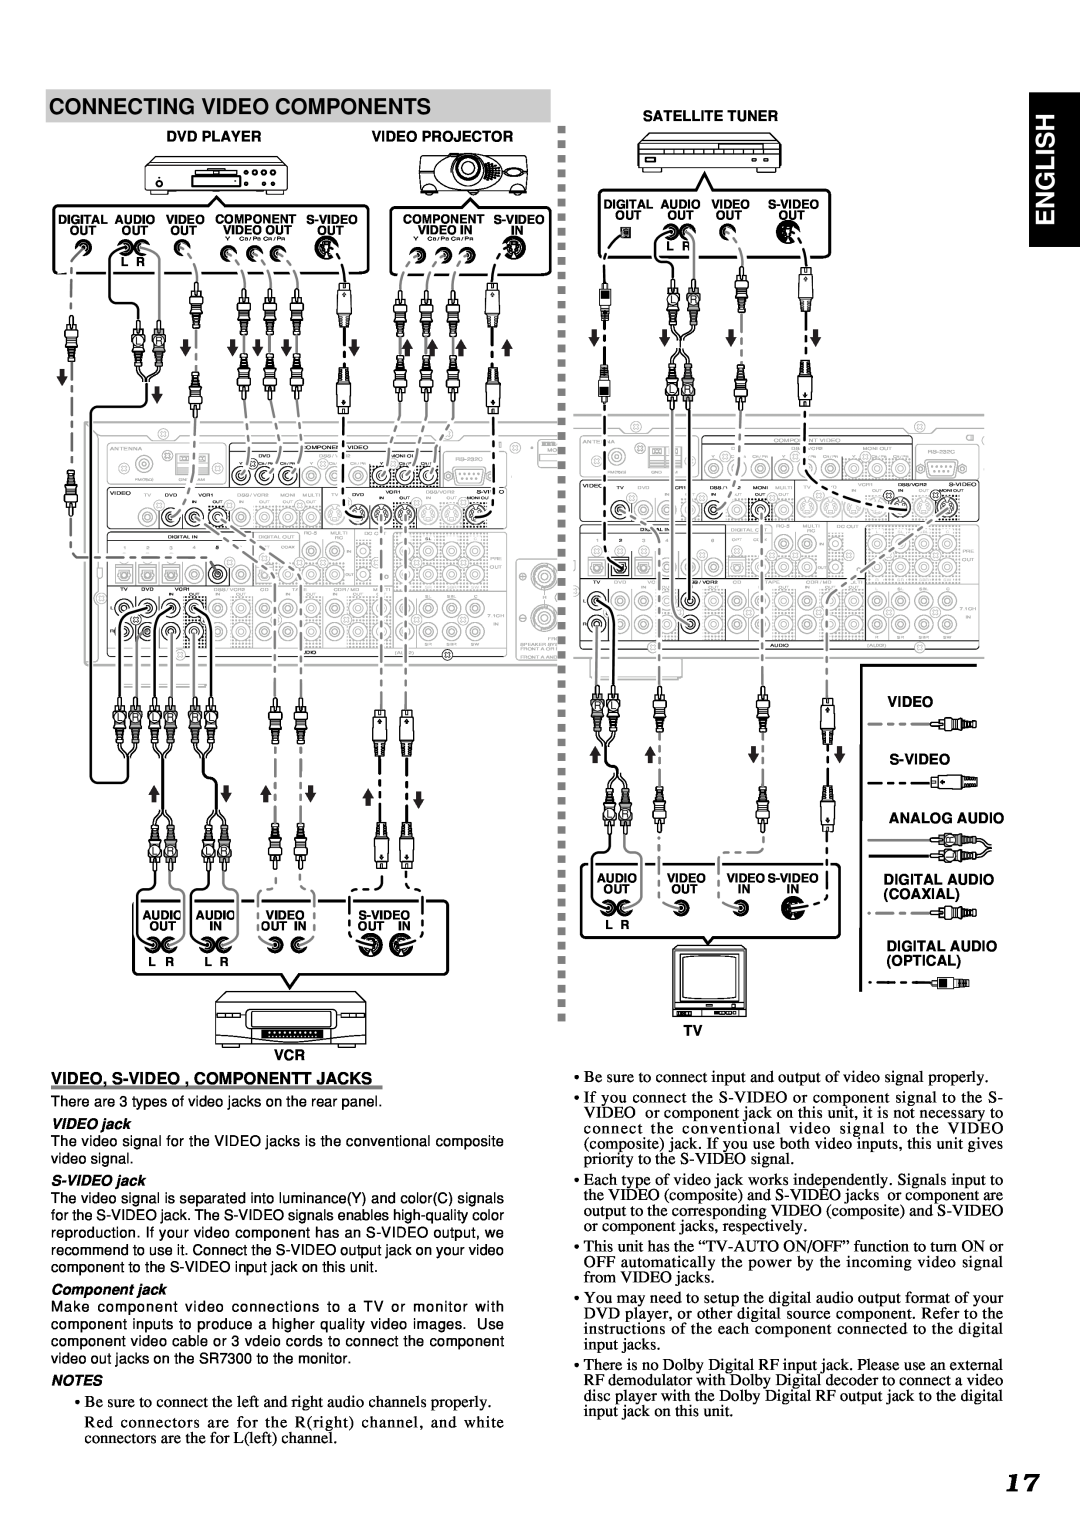 Marantz SR7300 manual English, Connecting Video Components, Video, S-Video ,Componentt Jacks 